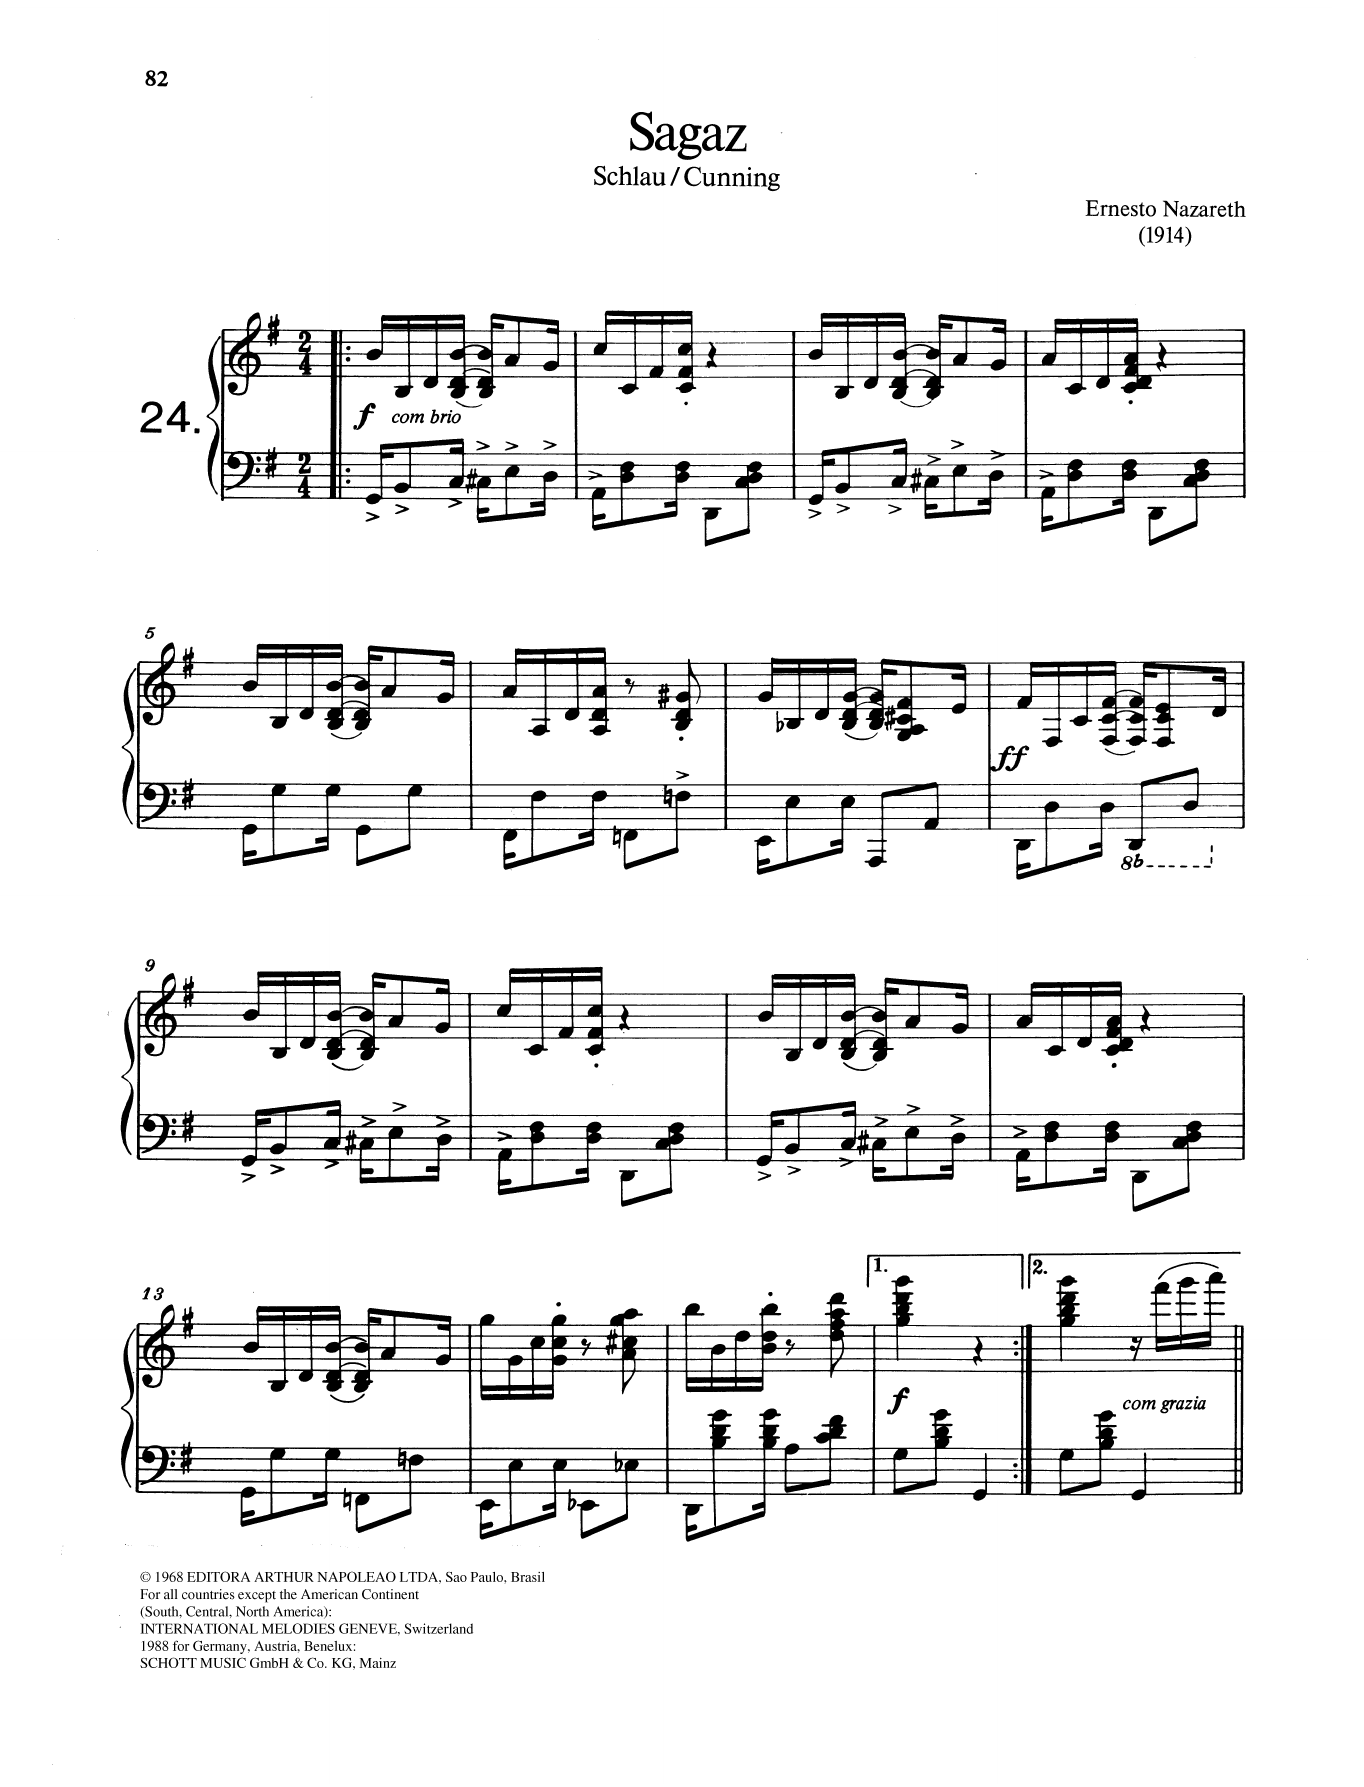 Ernesto Nazareth Sagaz Sheet Music Notes & Chords for Piano Solo - Download or Print PDF